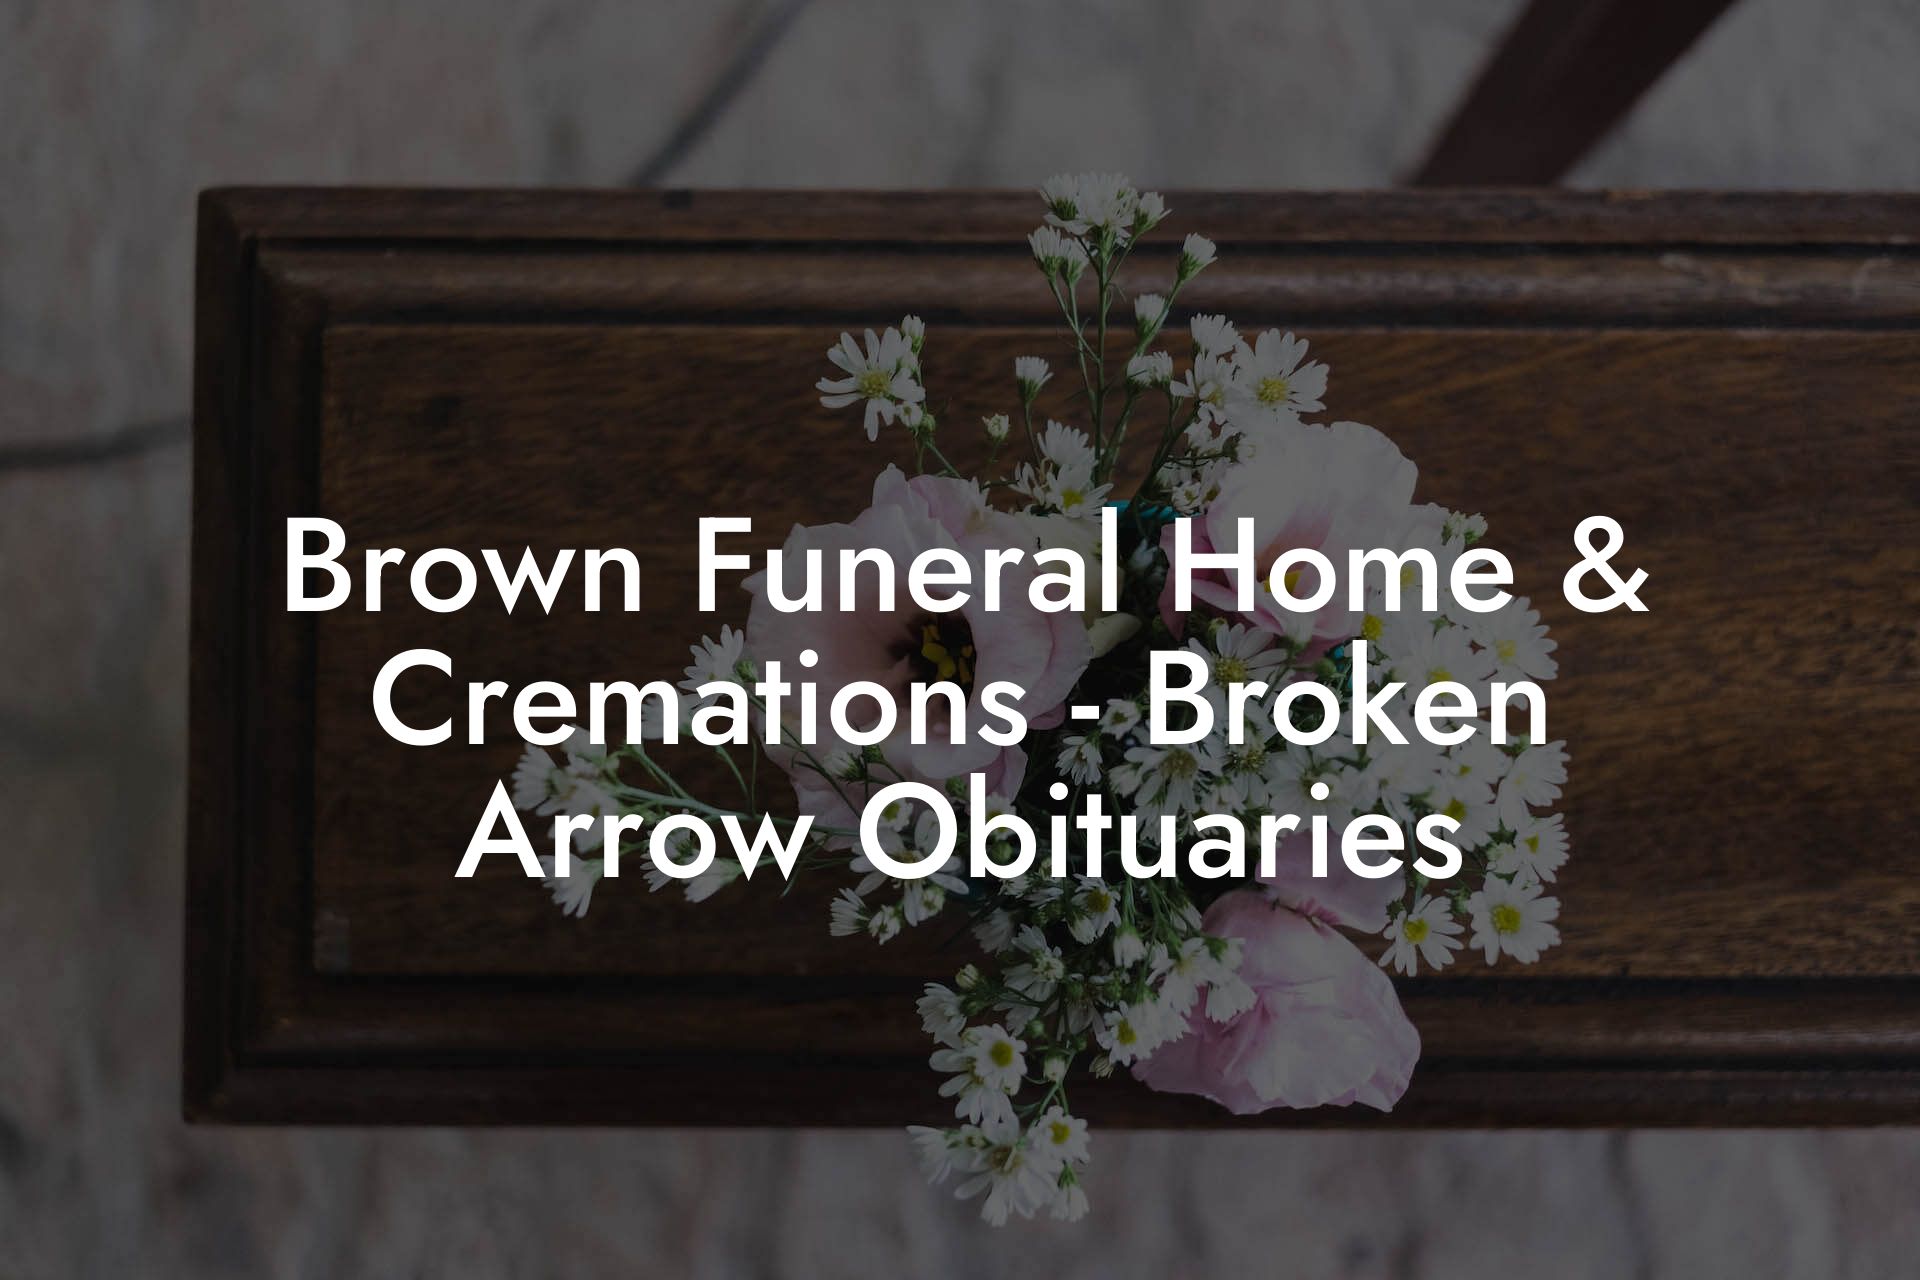 Brown Funeral Home & Cremations - Broken Arrow Obituaries